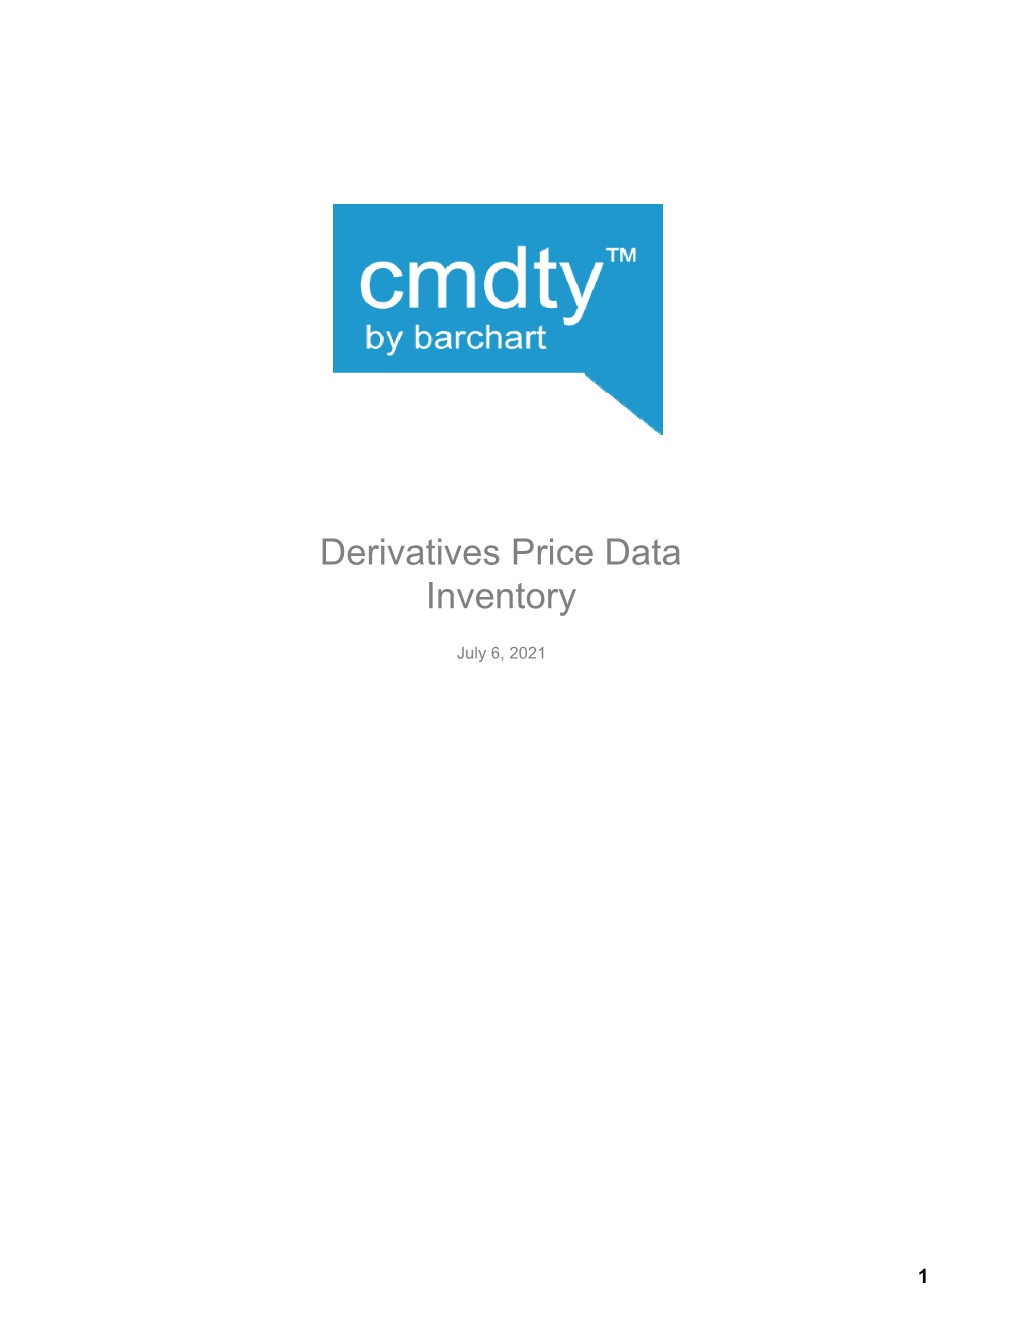 Derivatives Price Data Inventory